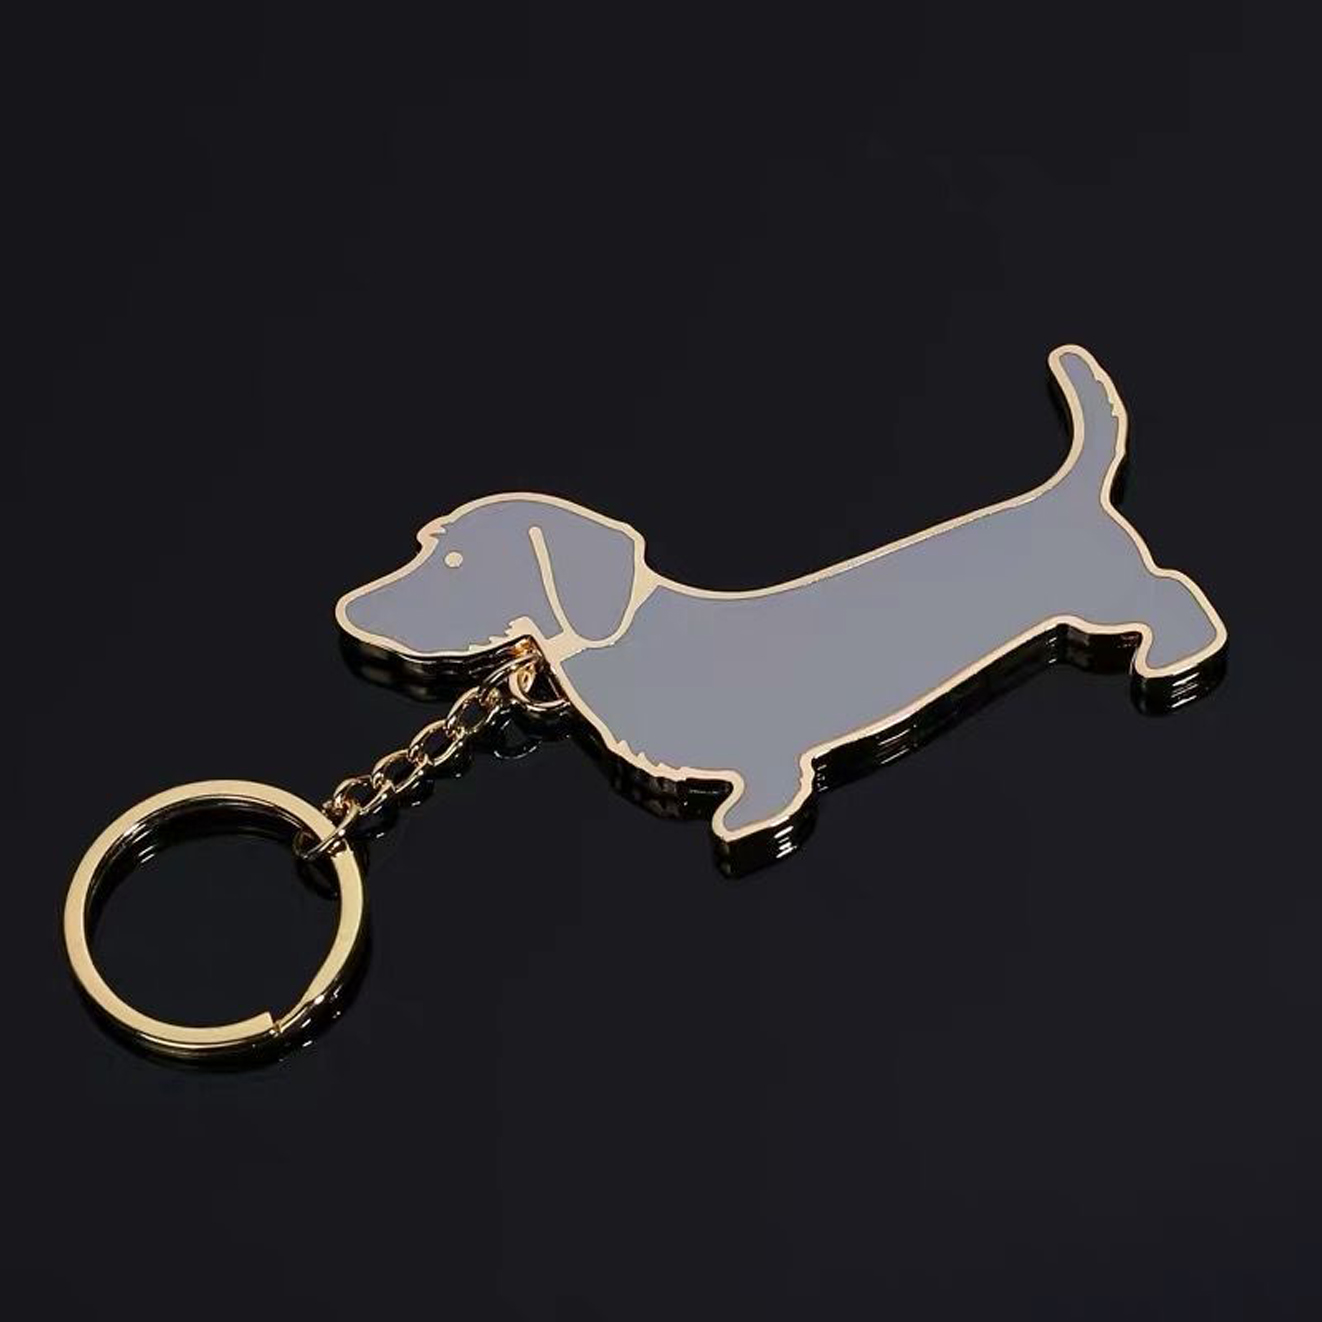 Designer Key Buckle Car Keychain with cute dog Men Women Bag Pendant Accessories